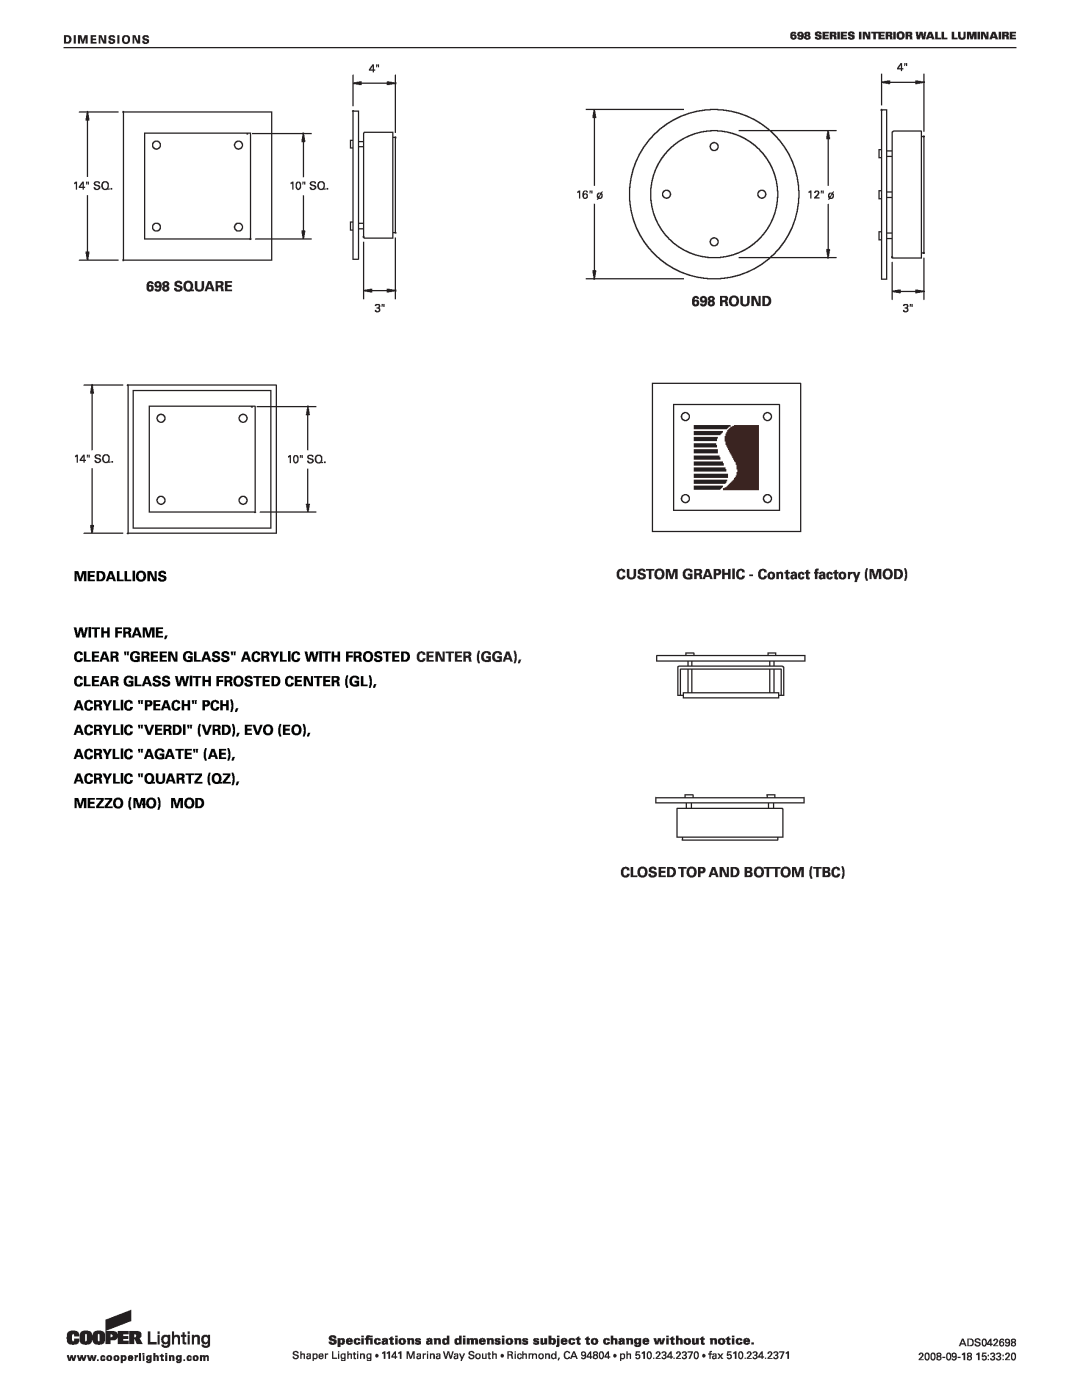 Cooper Lighting 698 Series Square, Round, Medallions With Frame, Acrylic Peach Pch Acrylic Verdi Vrd, Evo Eo, 14 SQ, 16 ø 